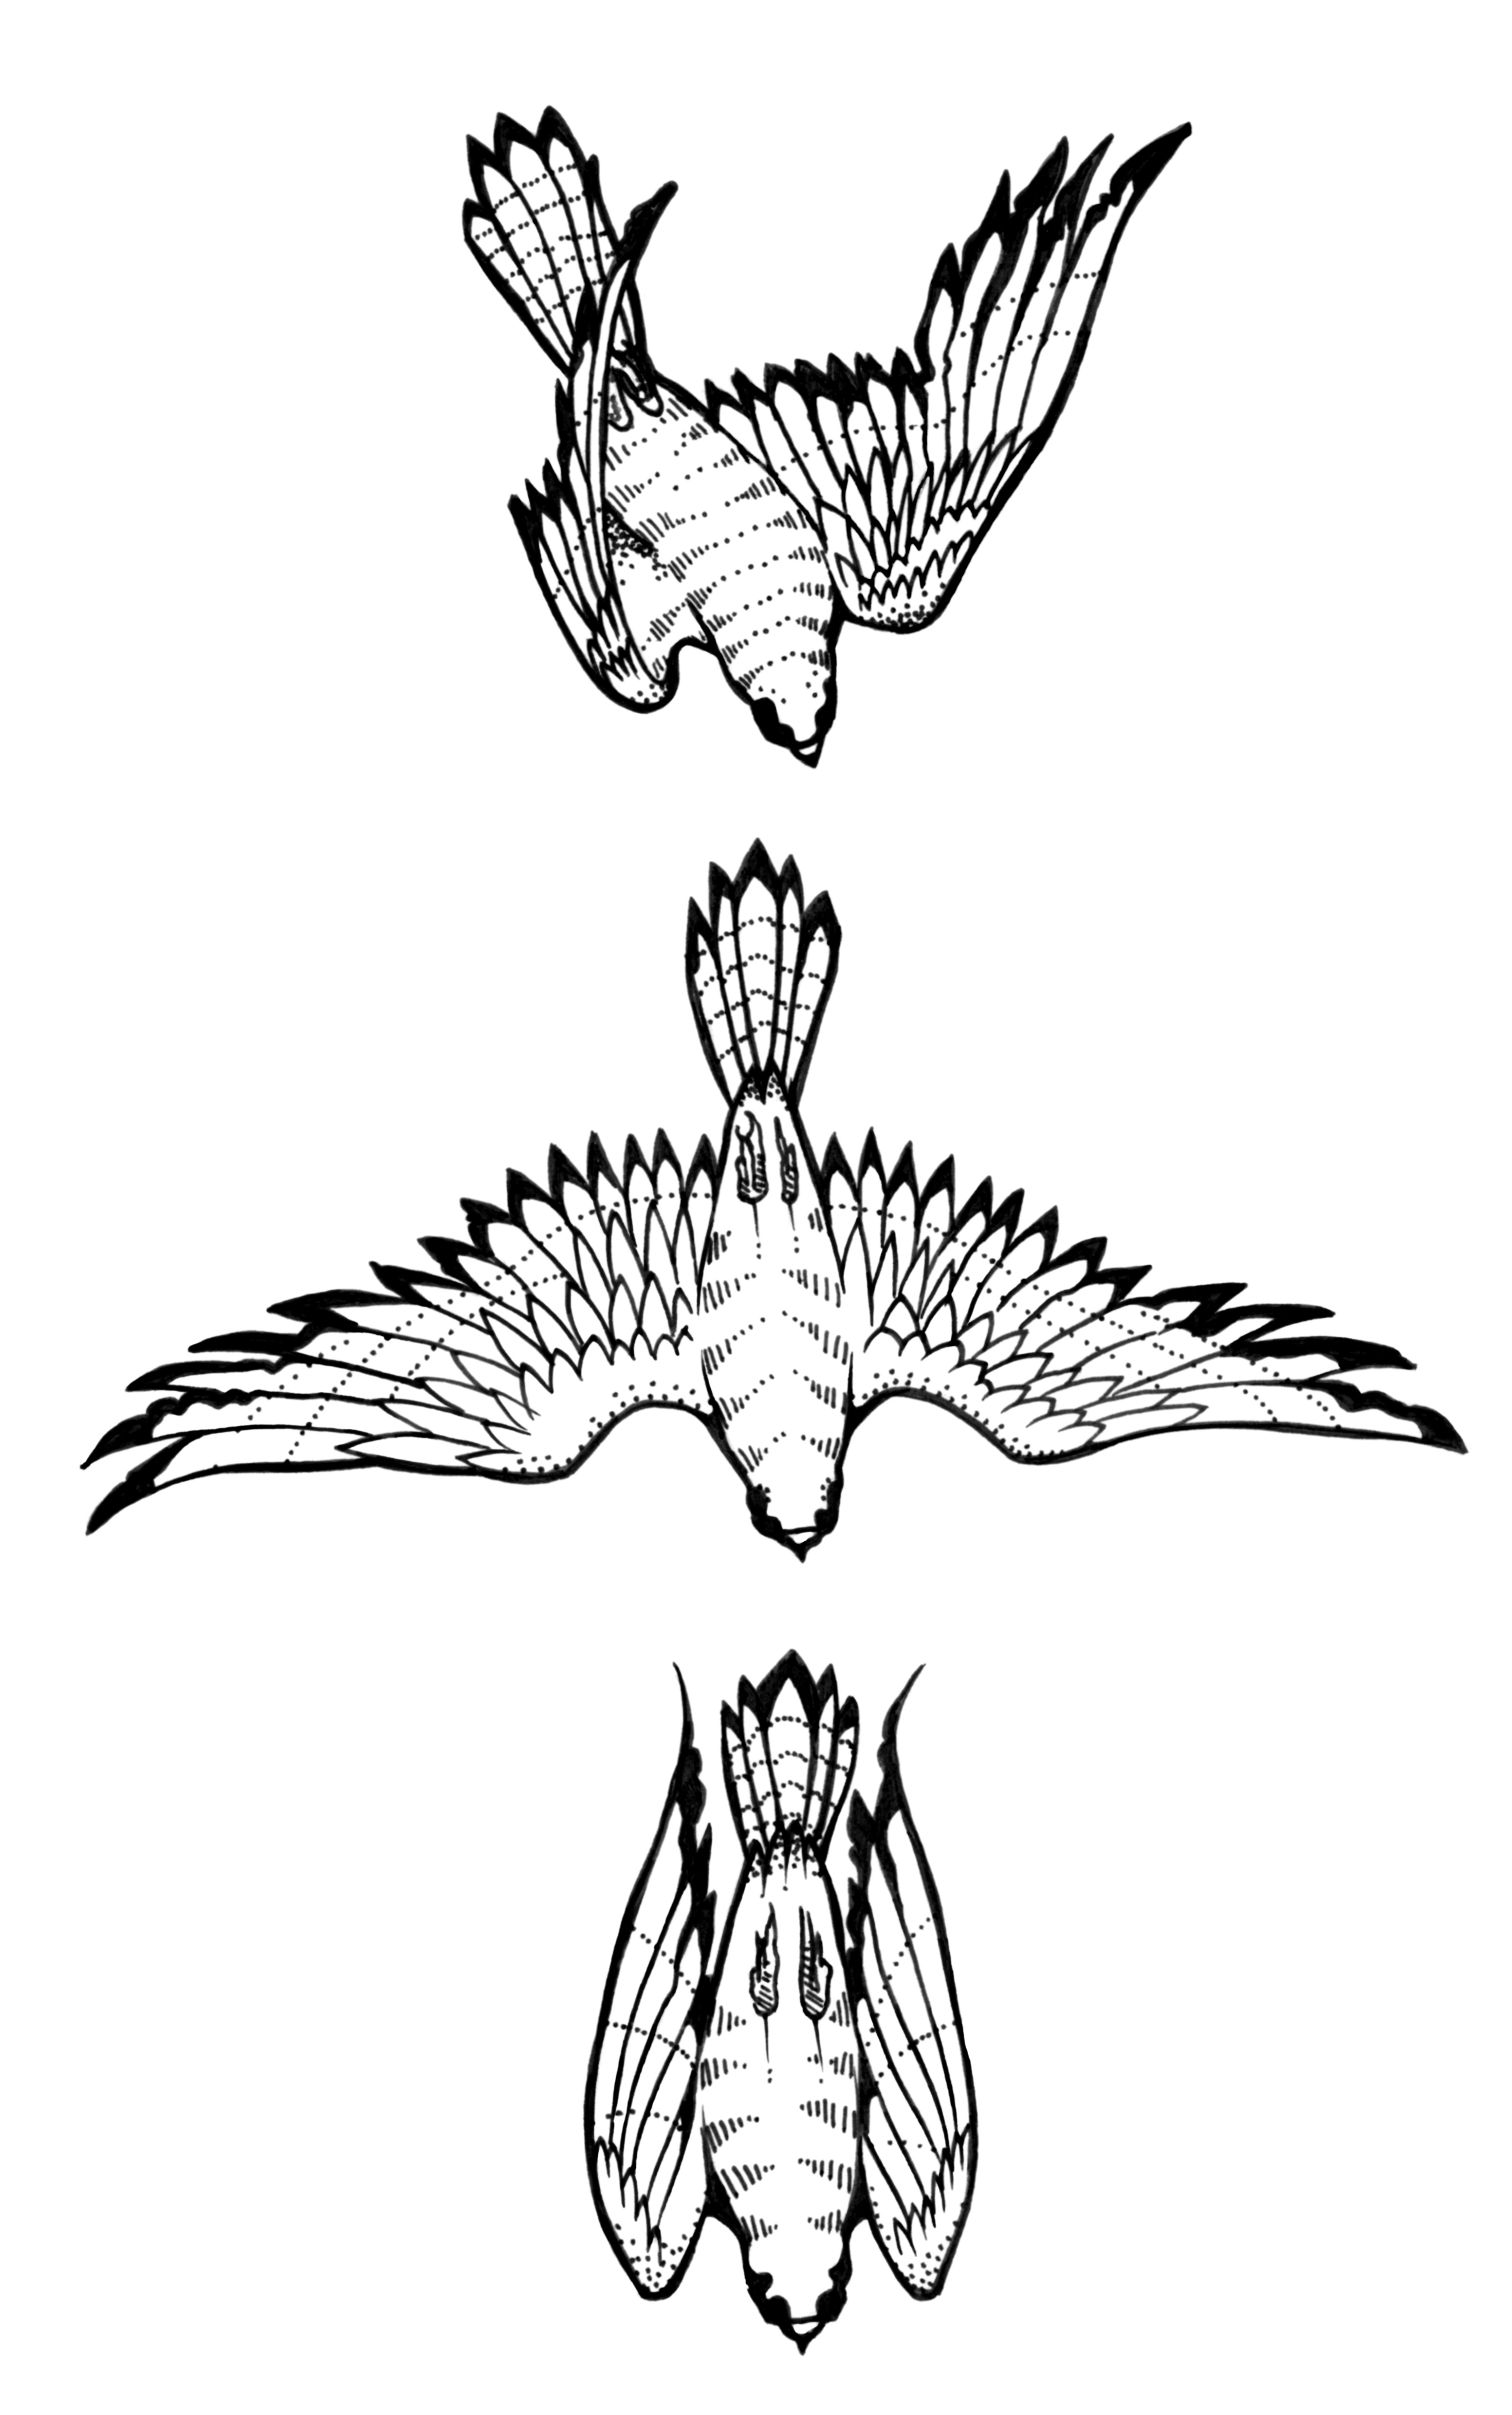 tribal hawk designs